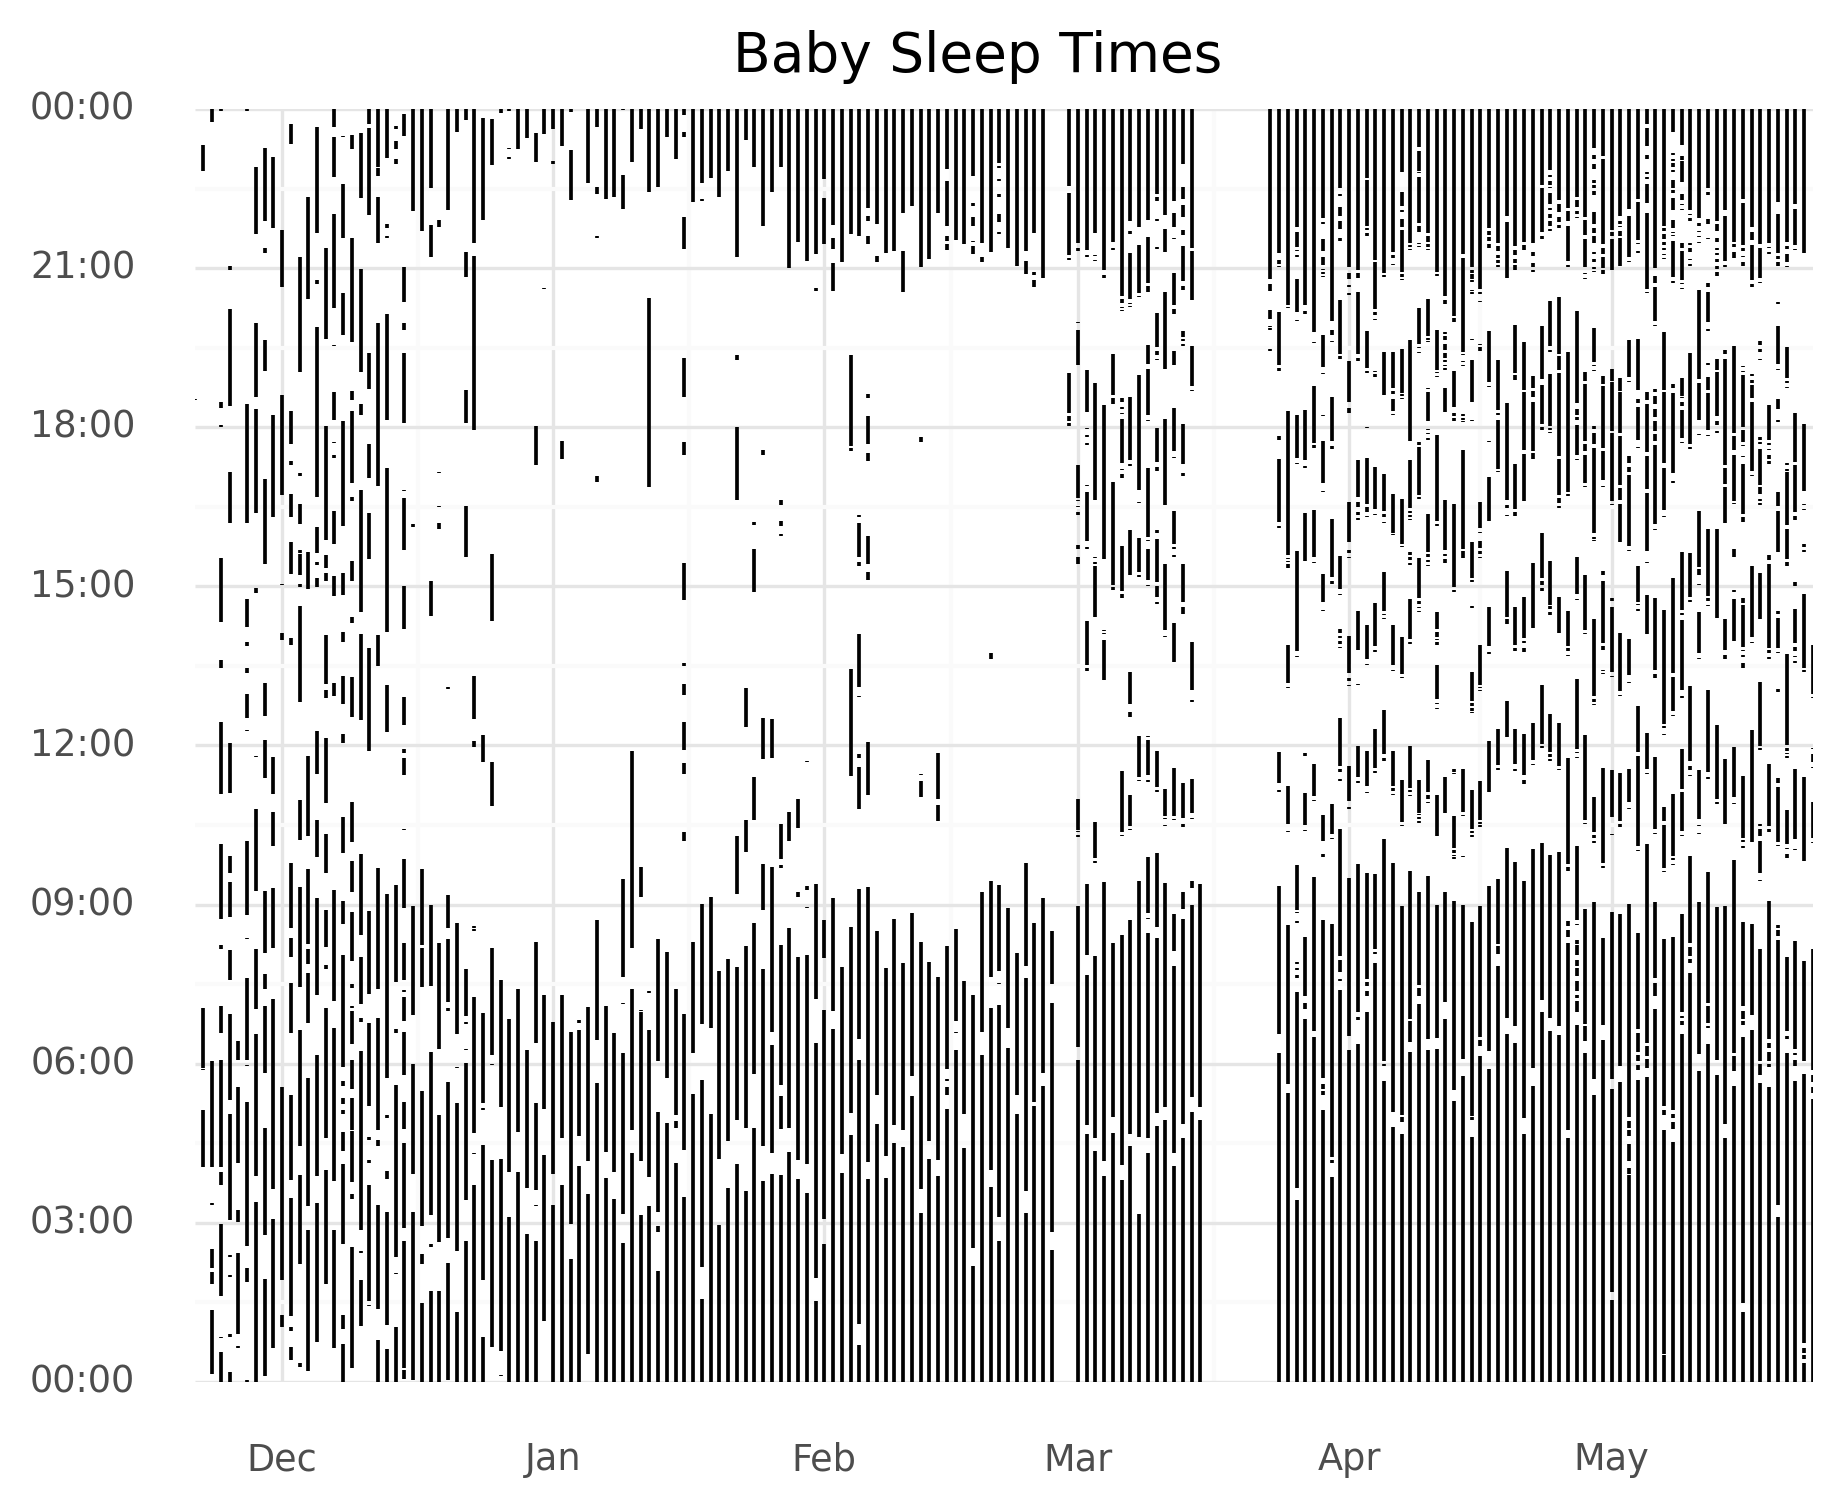 Baby sleep times